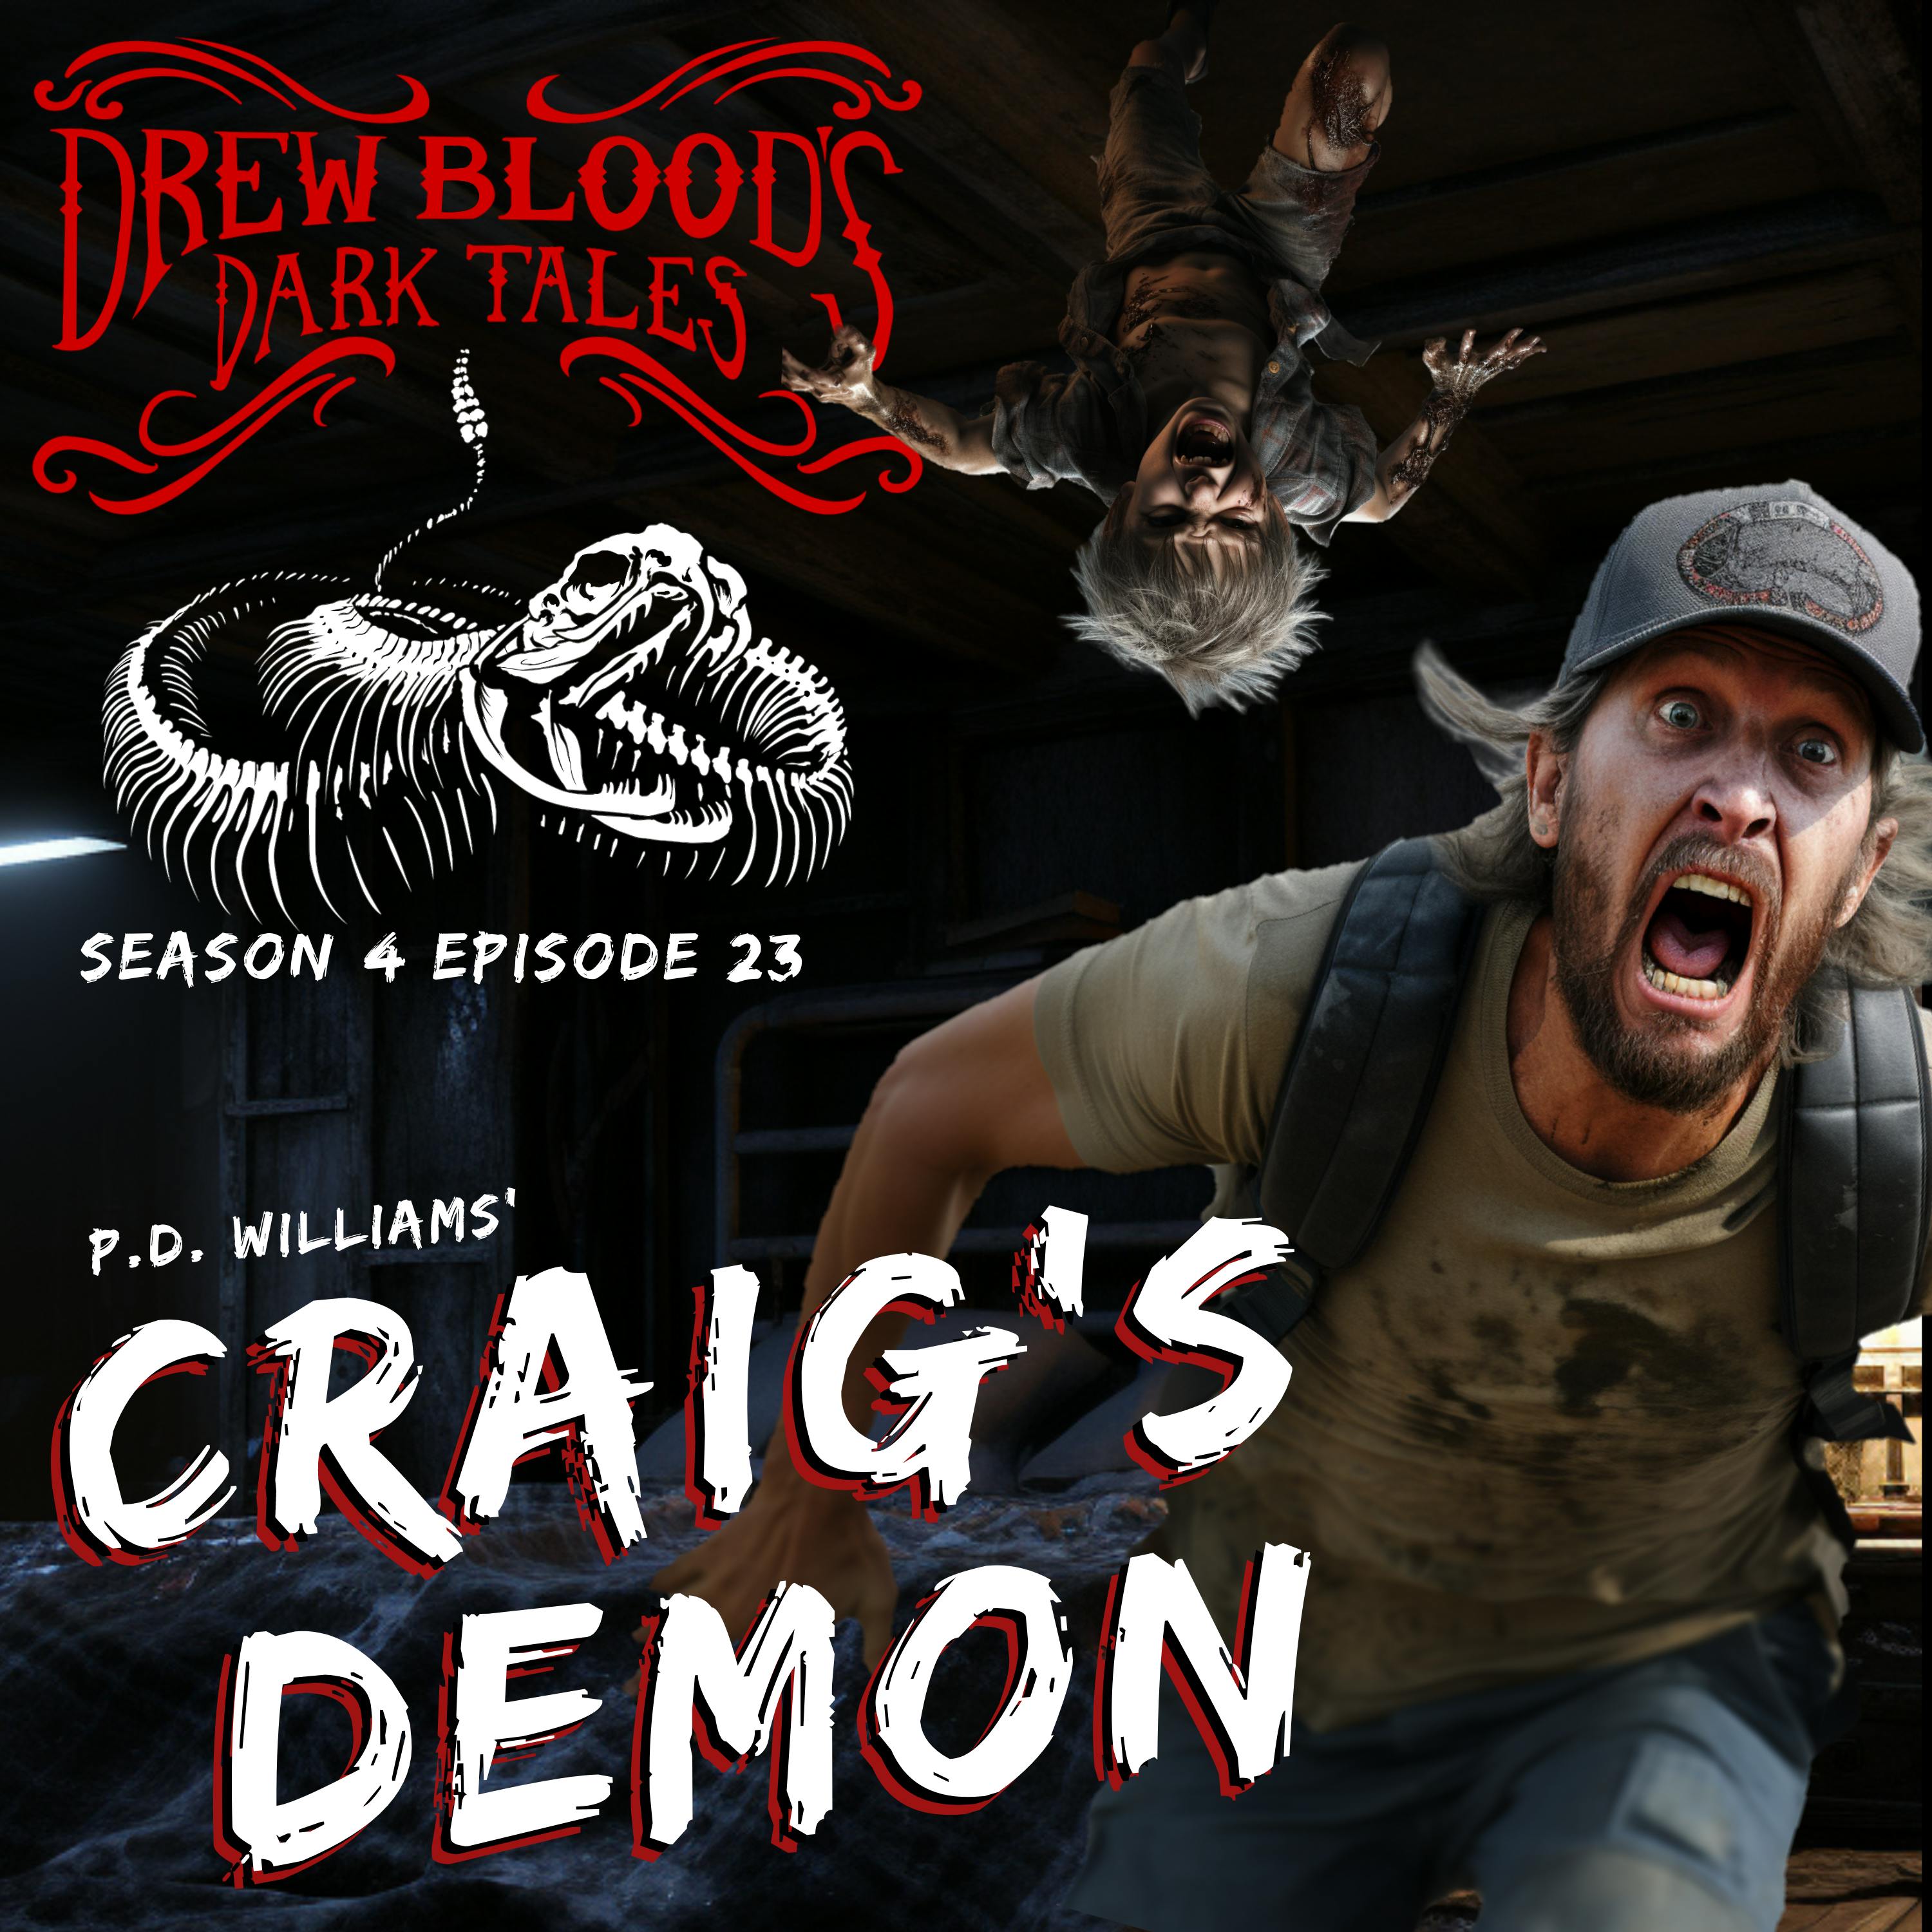 S4E23 - "Craig's Demon" - Drew Blood